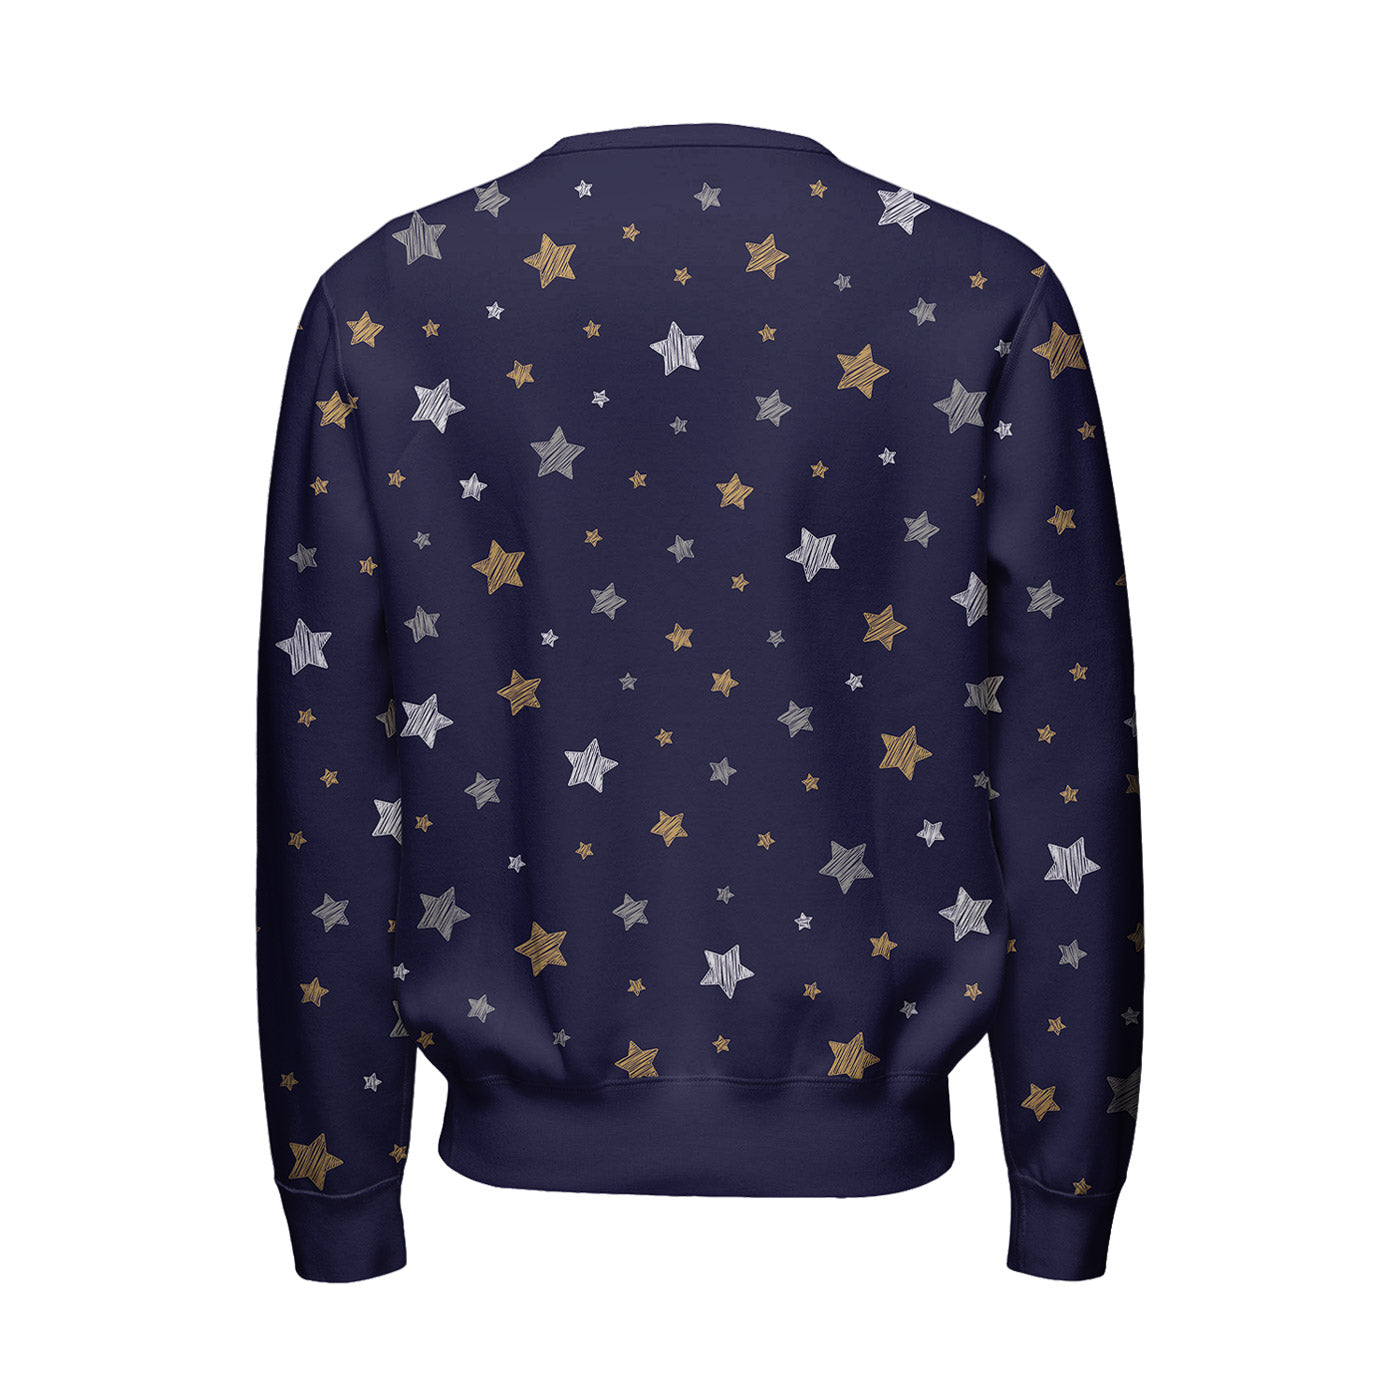 Tiny Star Sweatshirt